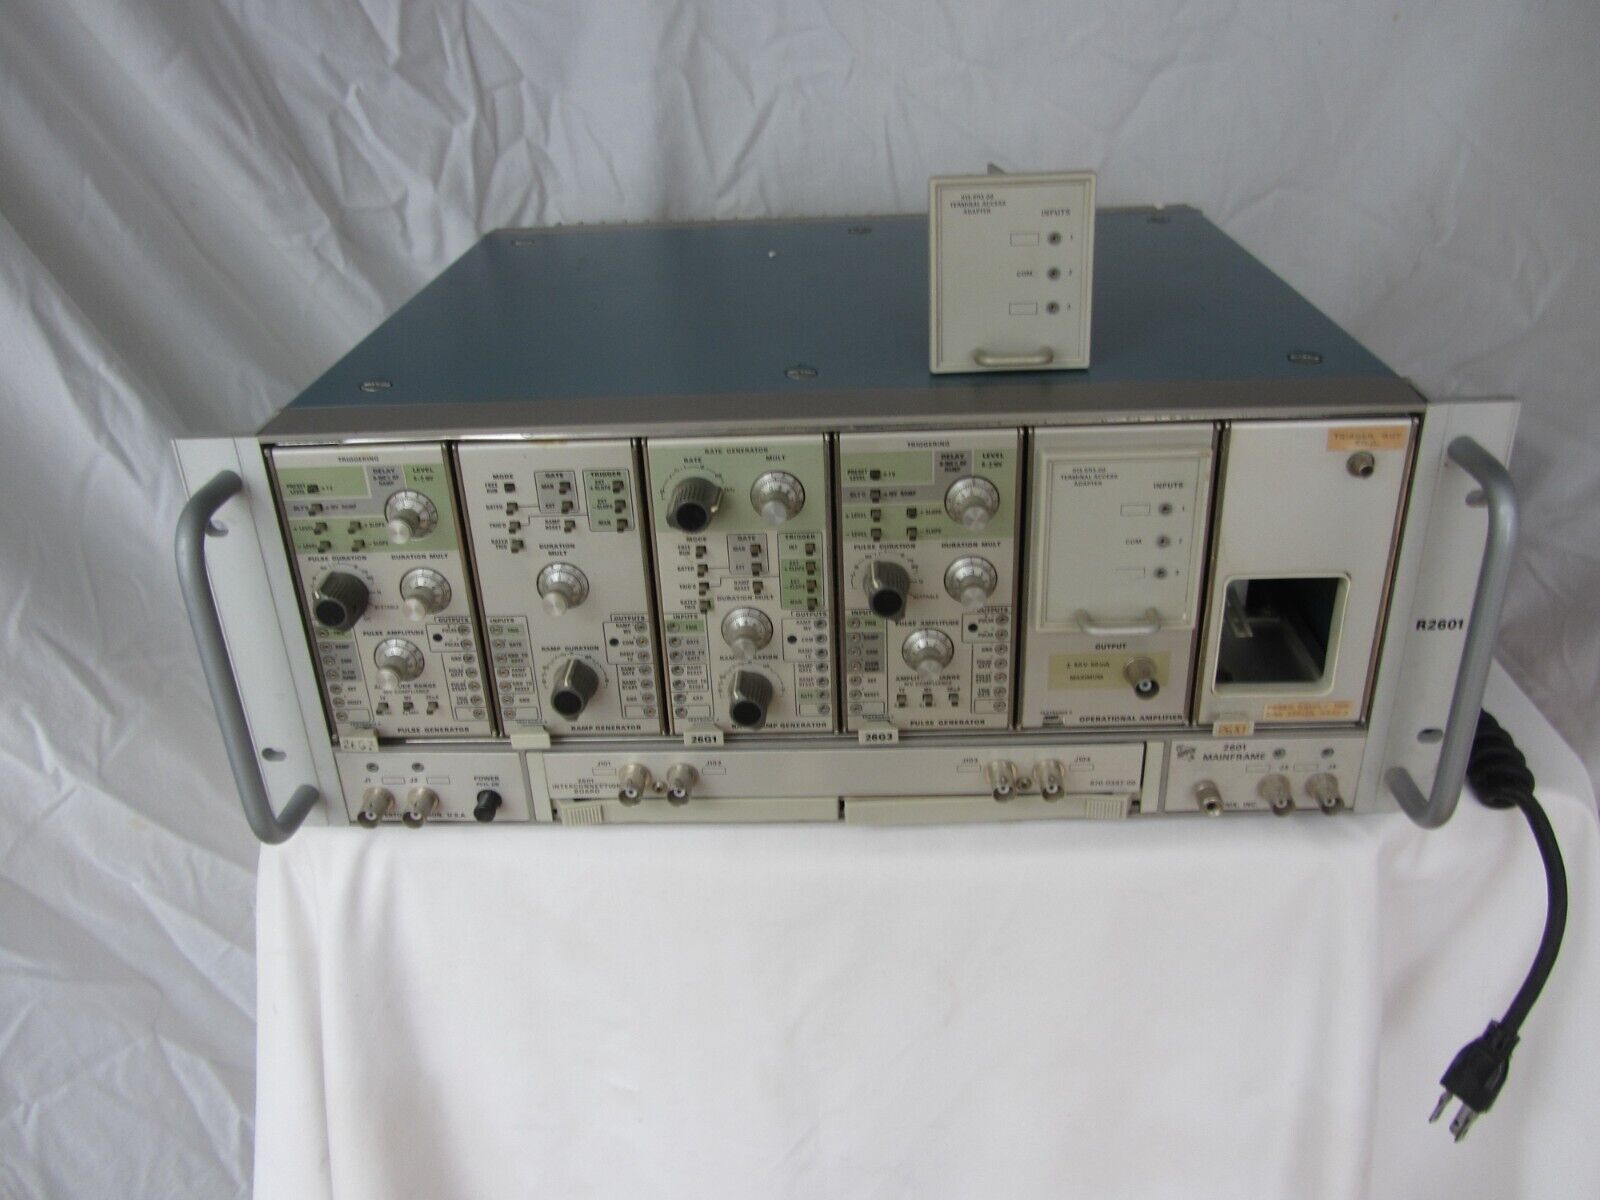 Tek  R2601  Rack Mount  2600 series mainframe  plus 7 plug-ins  S/N: B030778